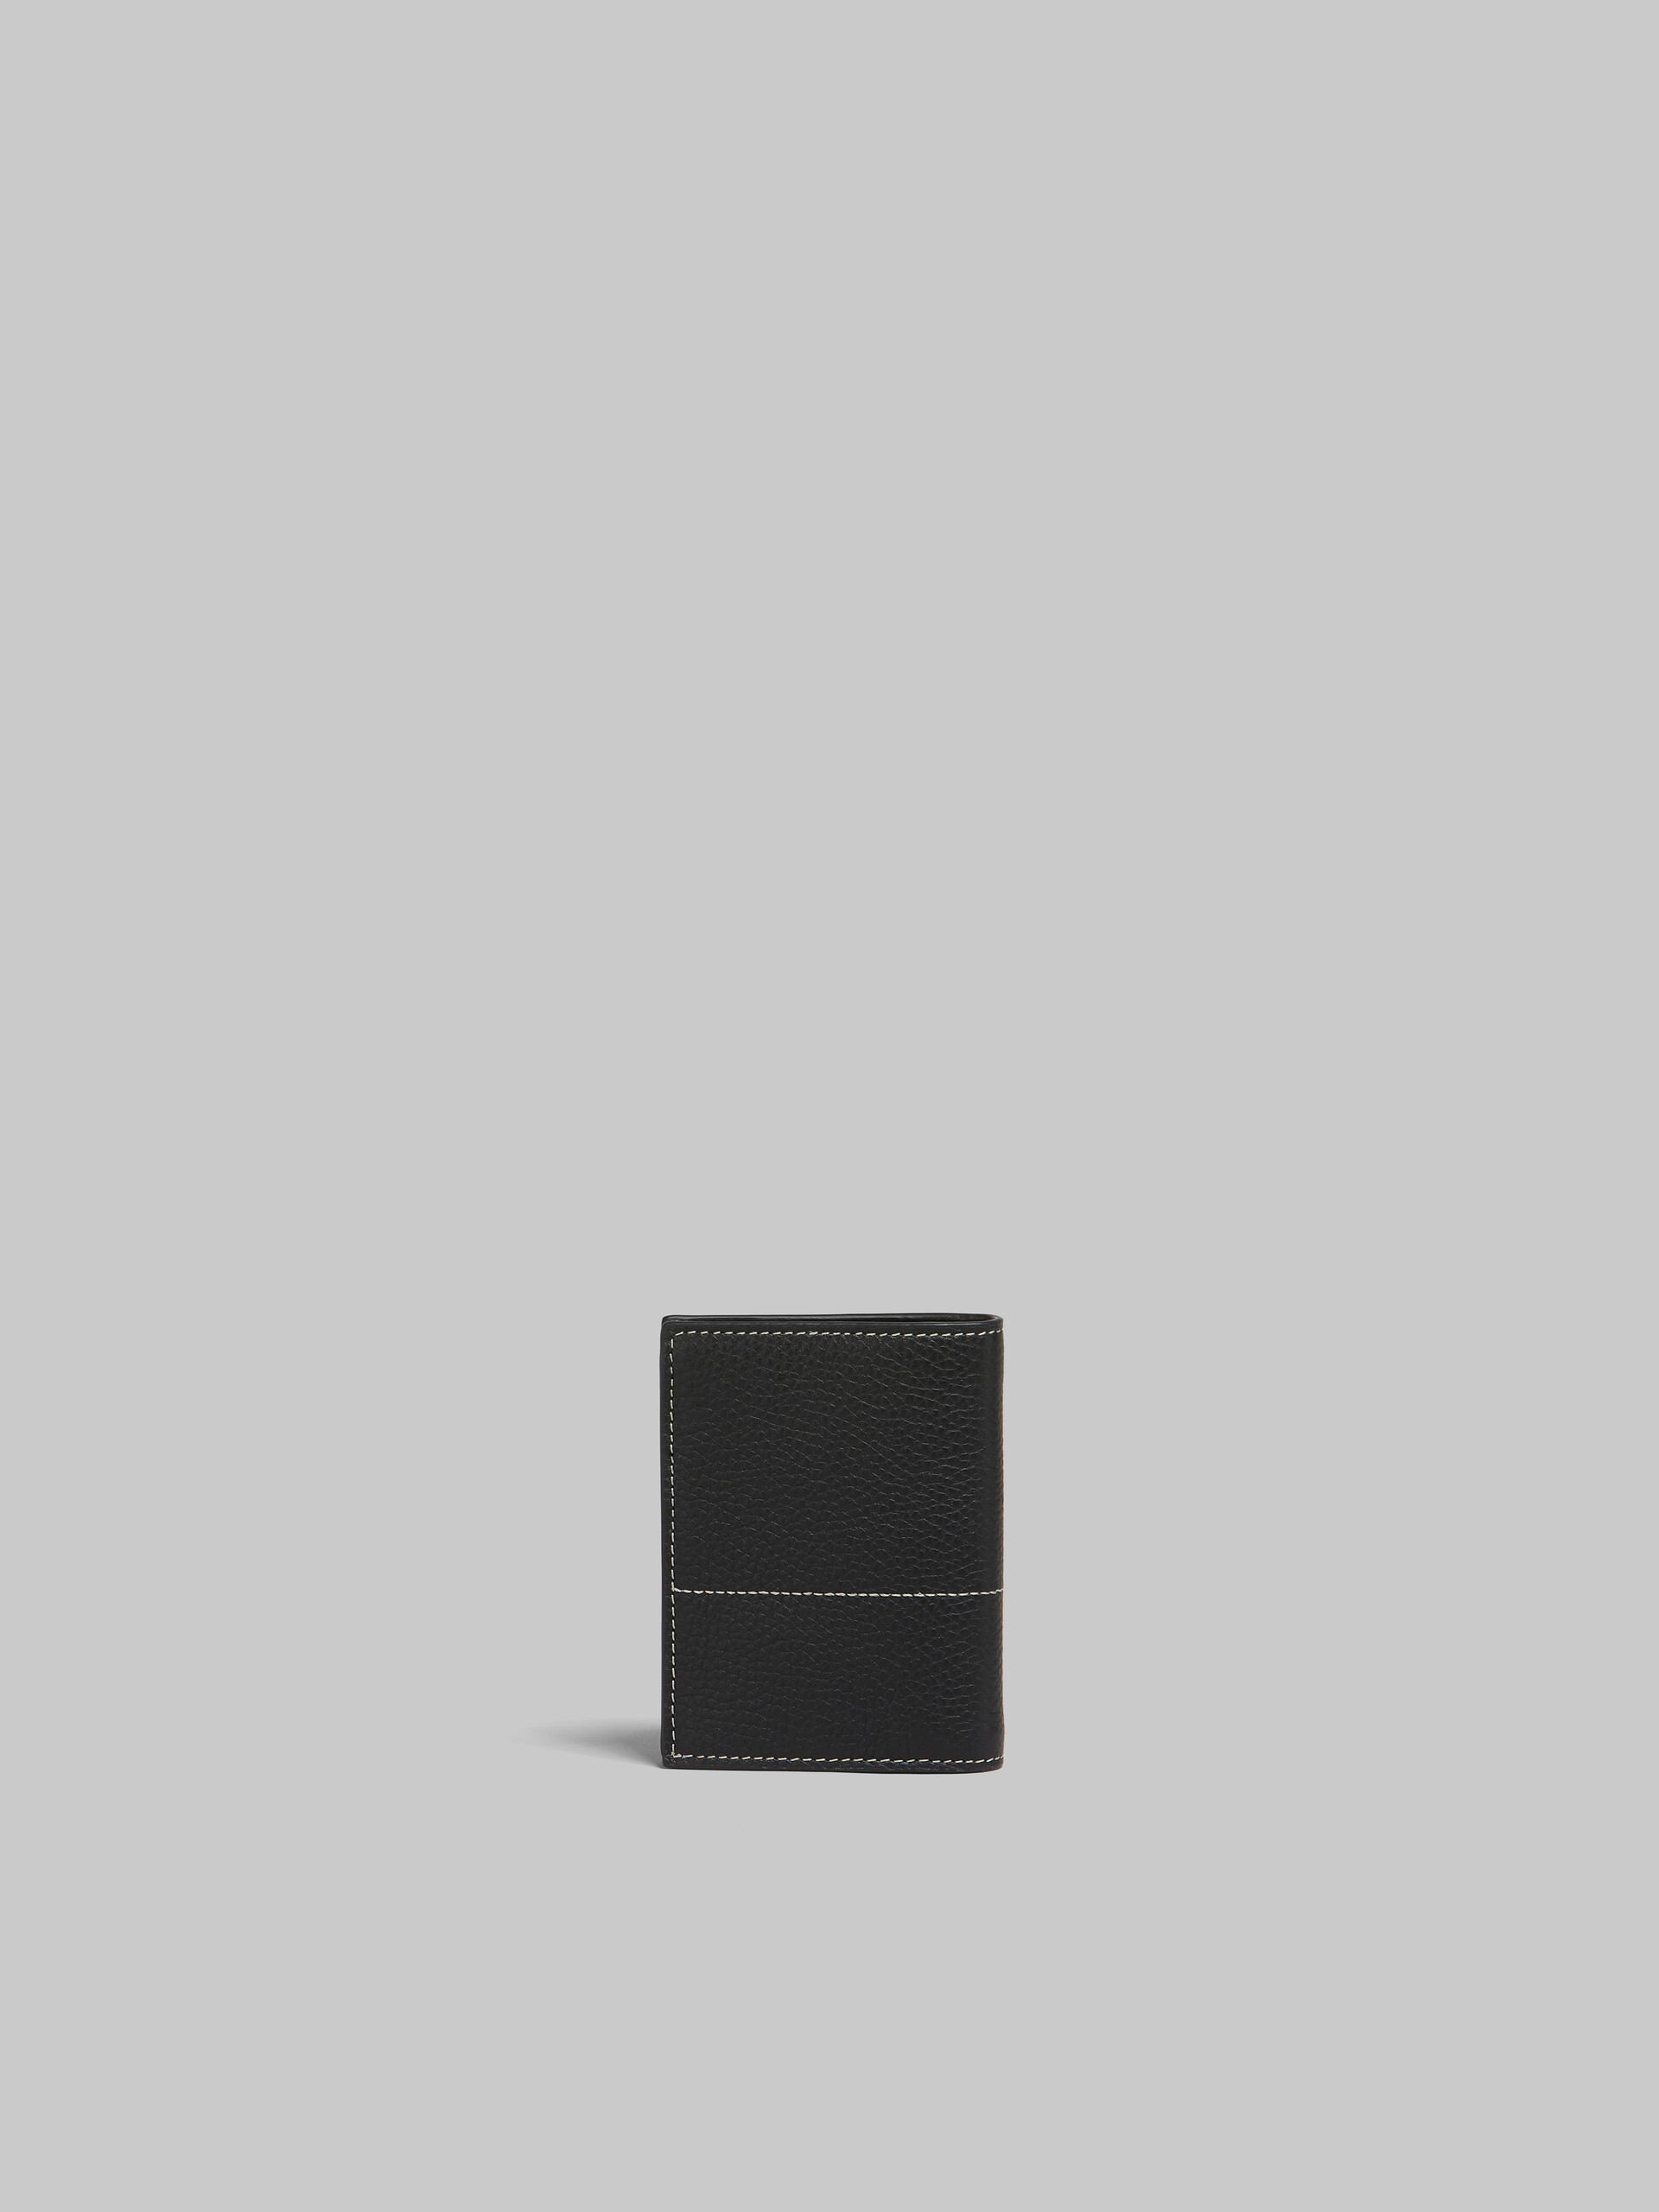 Black leather bifold card case - Wallets - Image 3